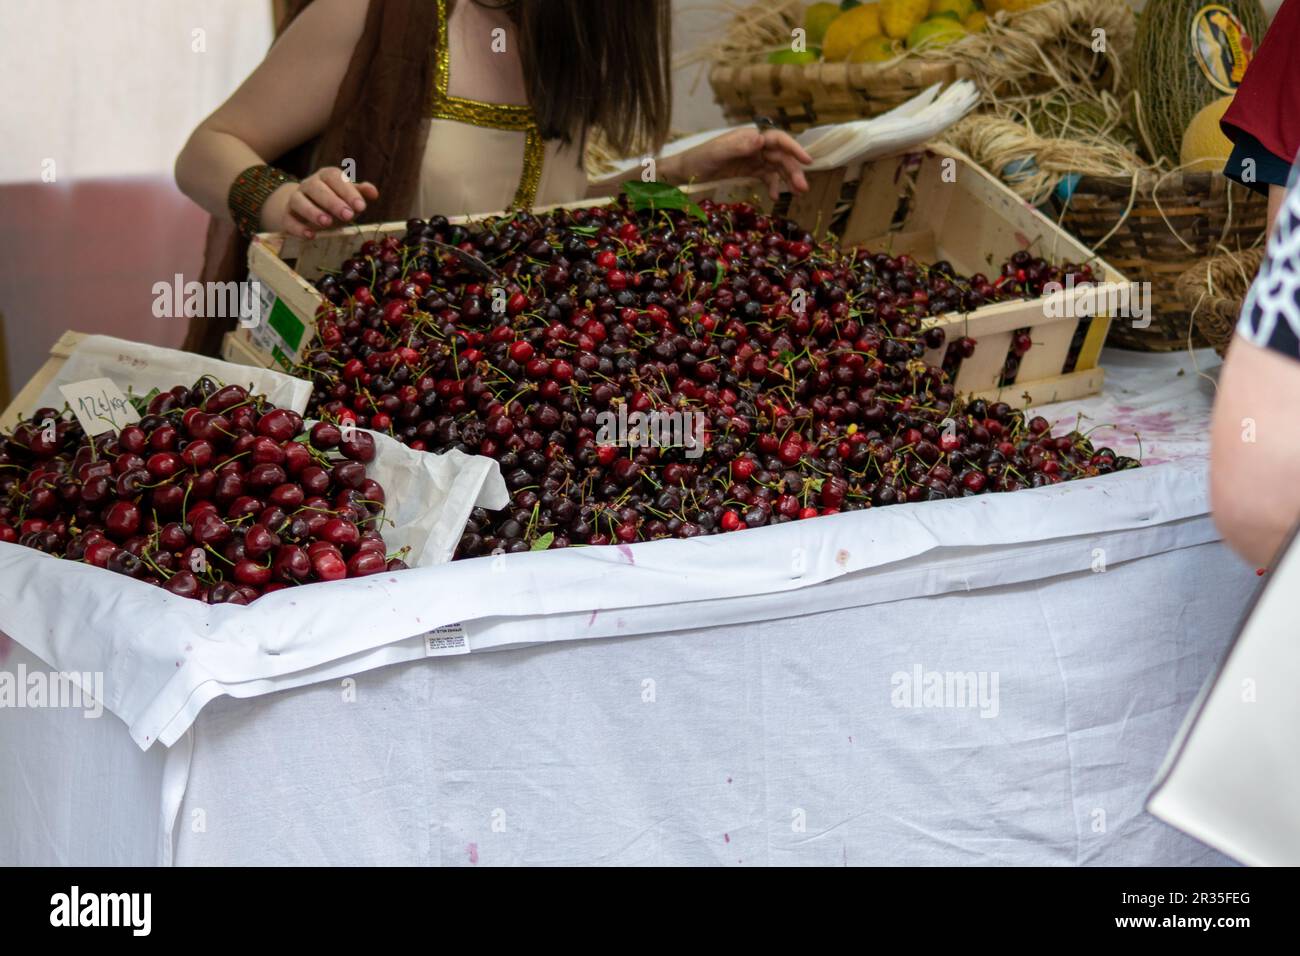 Selling cherries on a outside market. Basket full of cherries on street market. Stock Photo